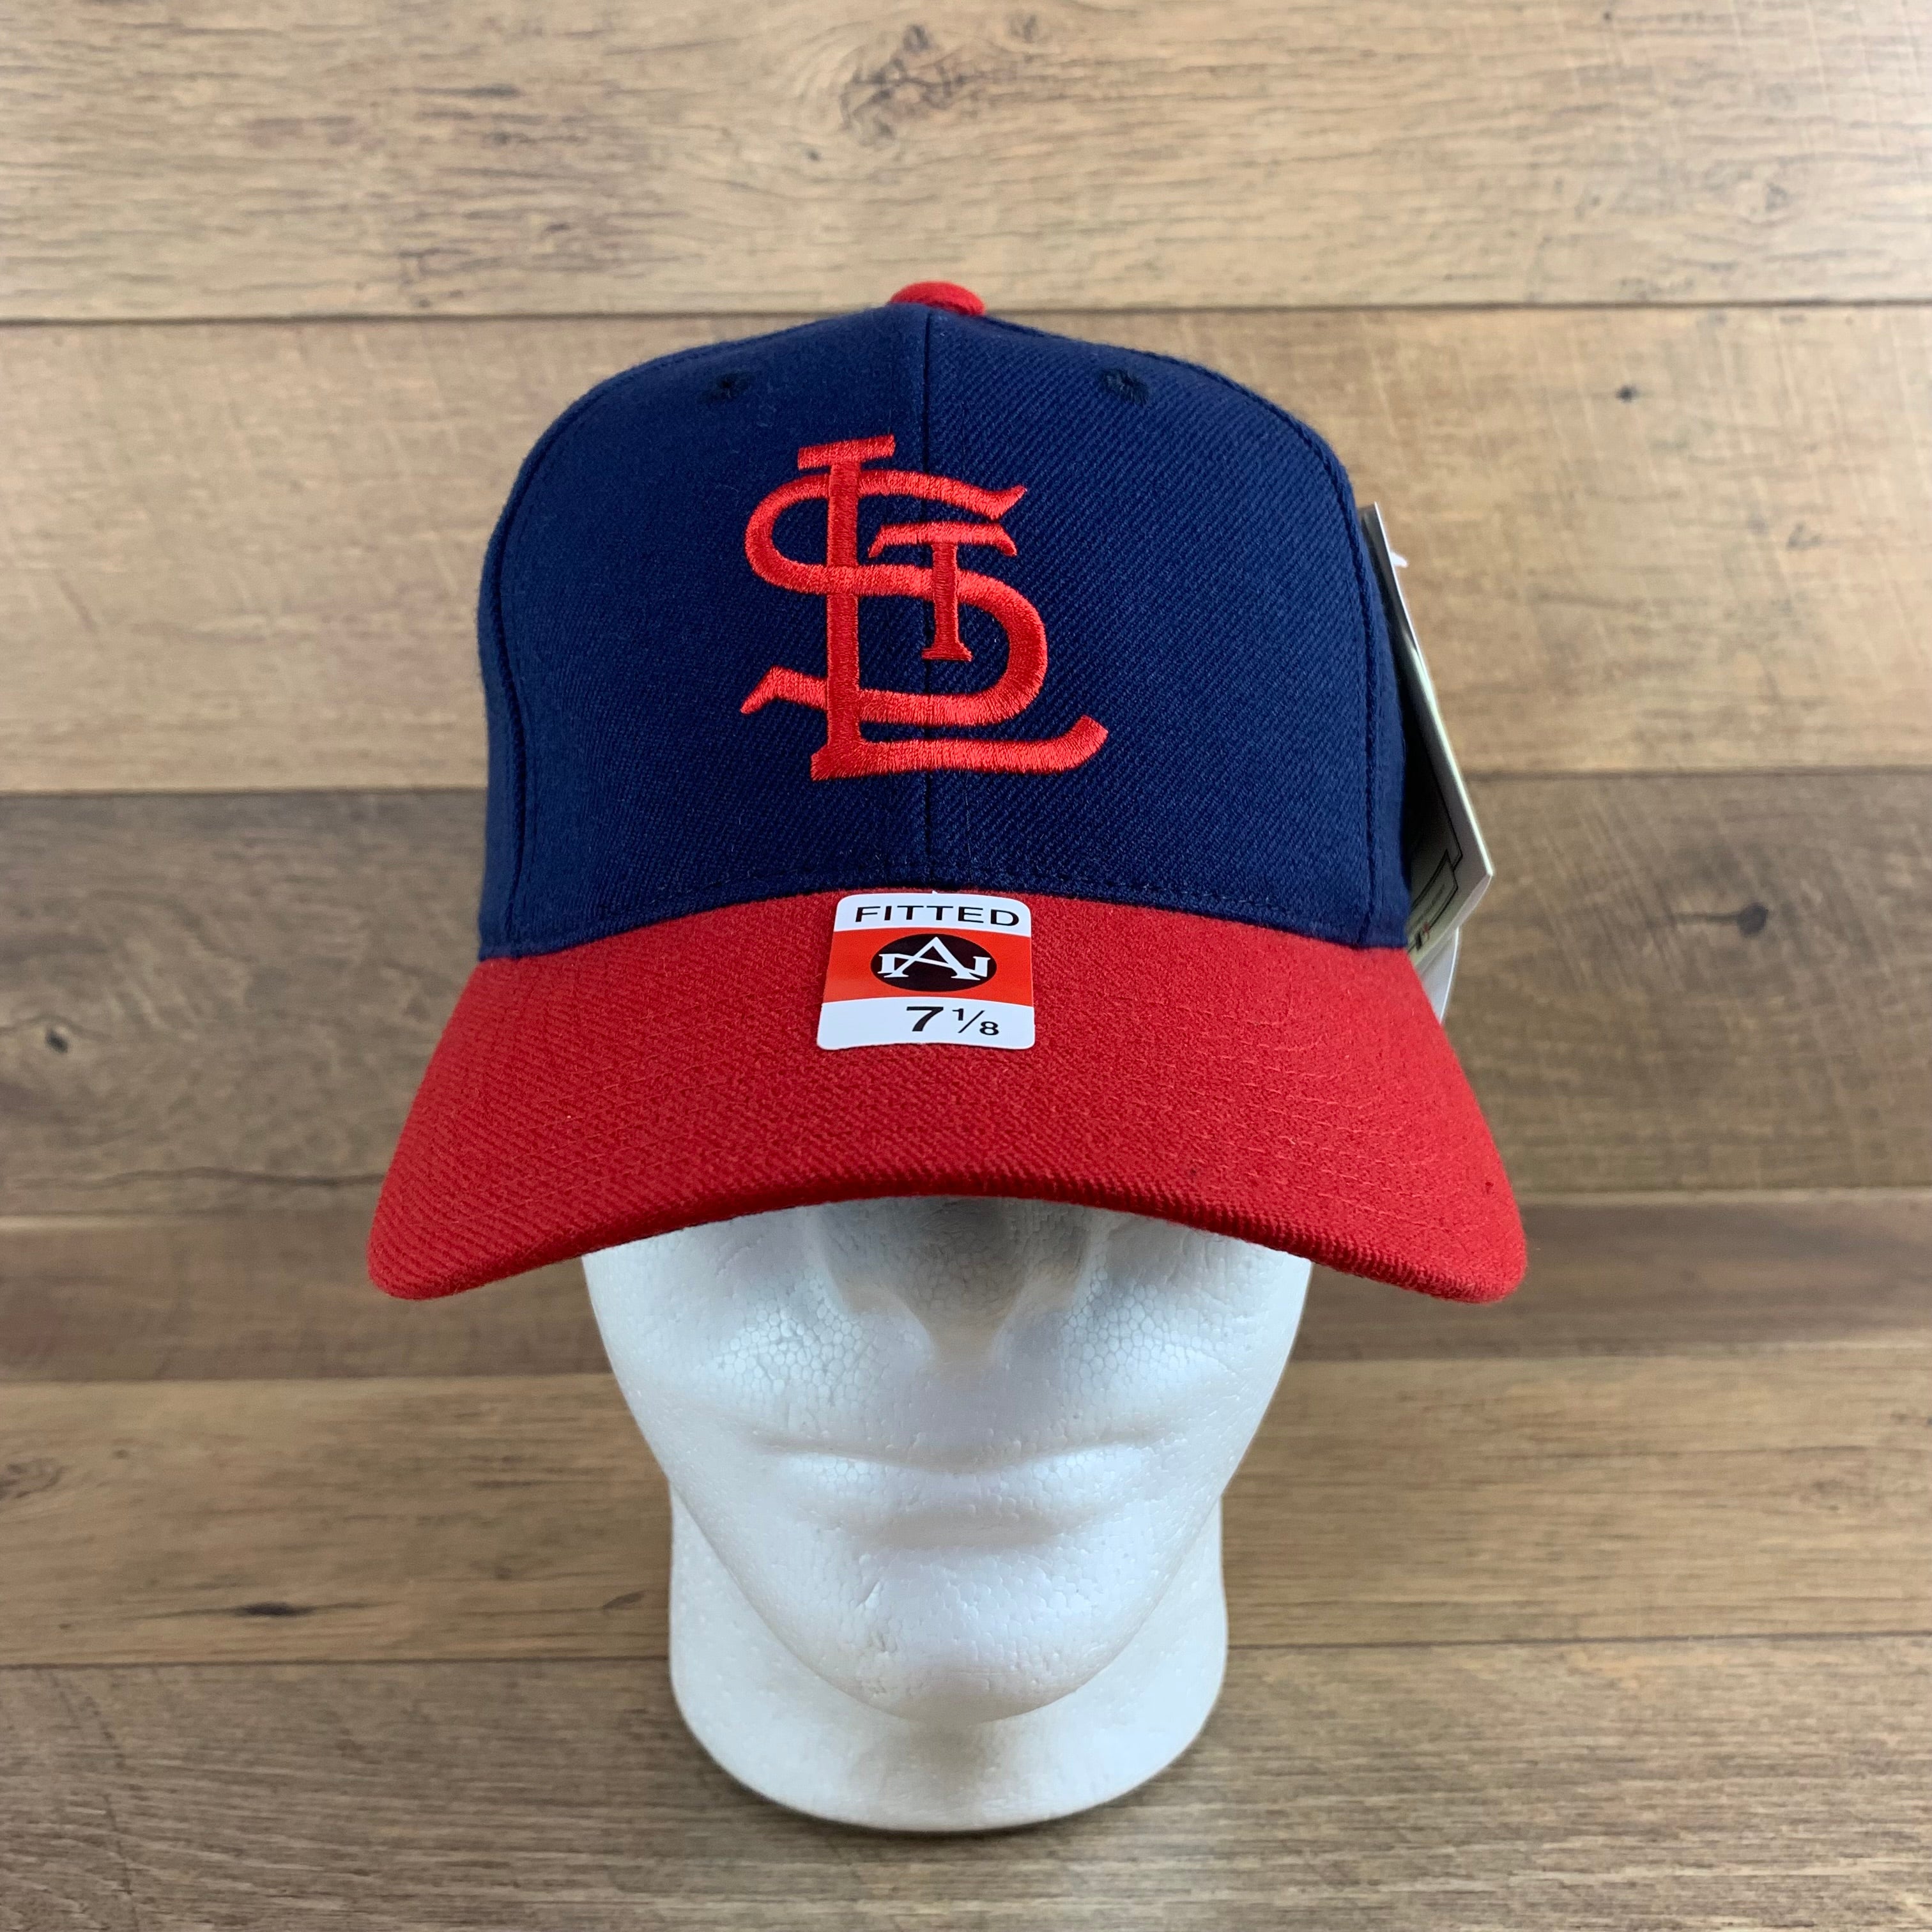 St. Louis Cardinals Hat, Cardinals Baseball Hats, Baseball Cap